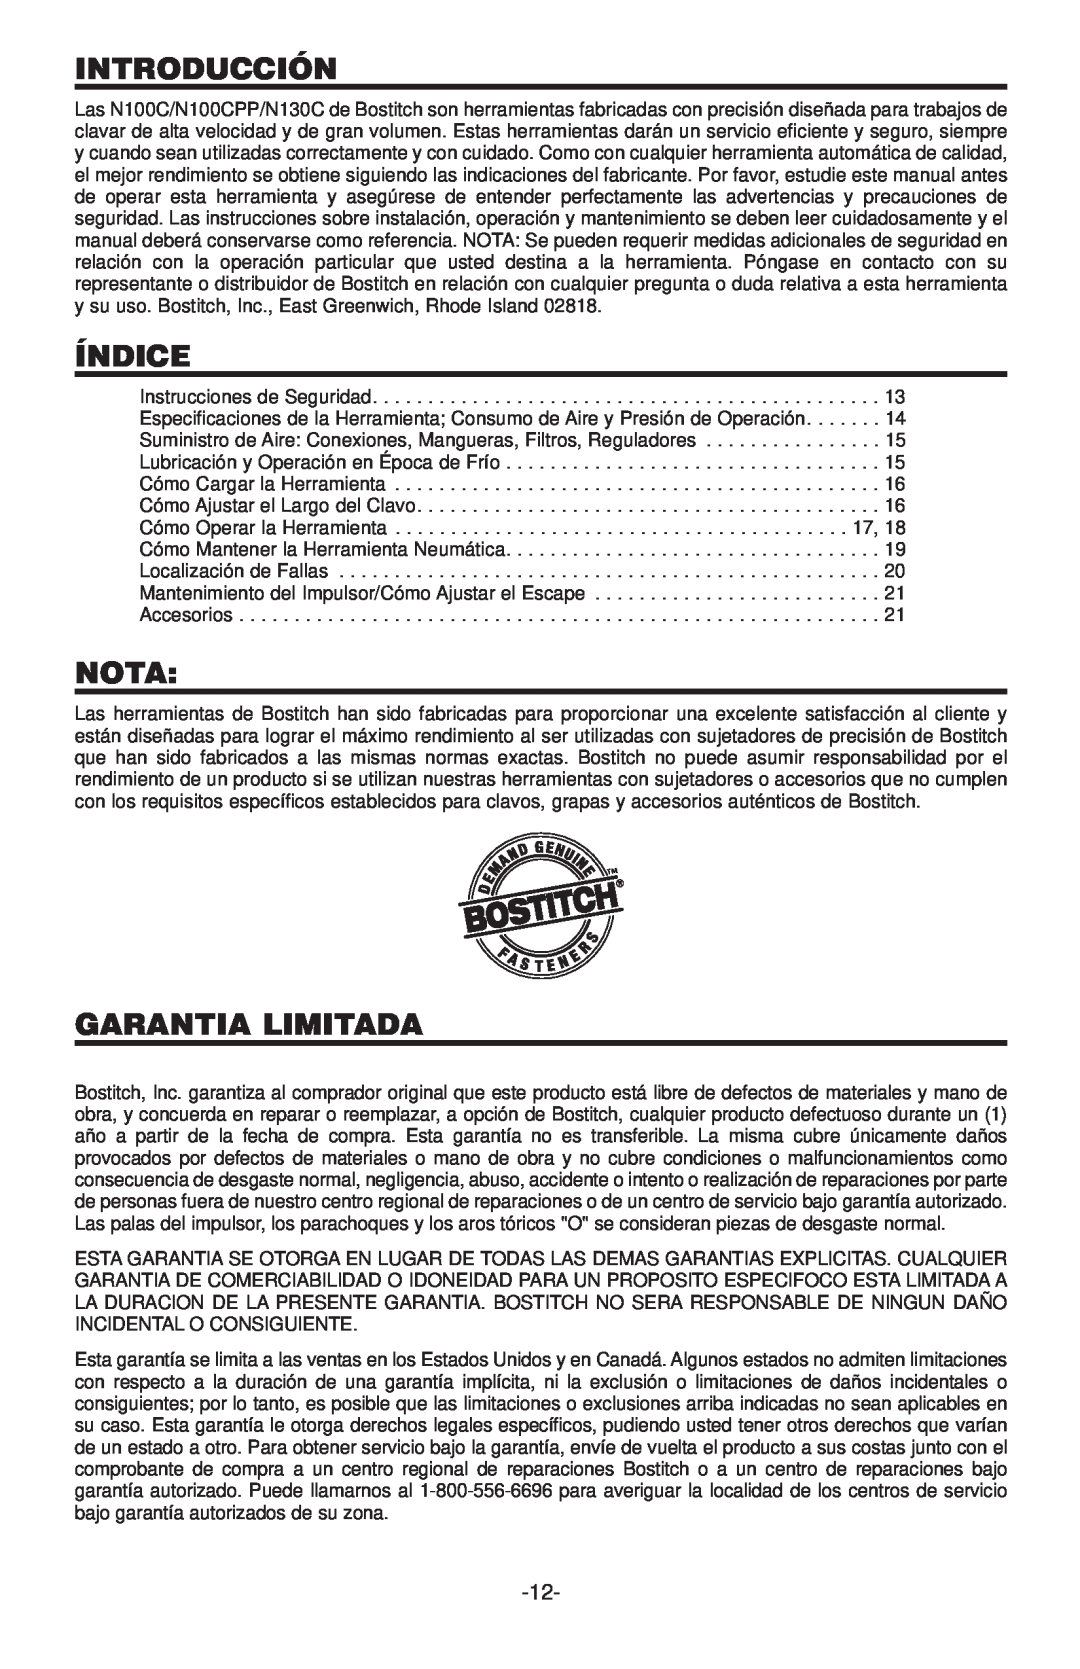 Bostitch N100CPP, N130C manual Introducción, Índice, Nota, Garantia Limitada 